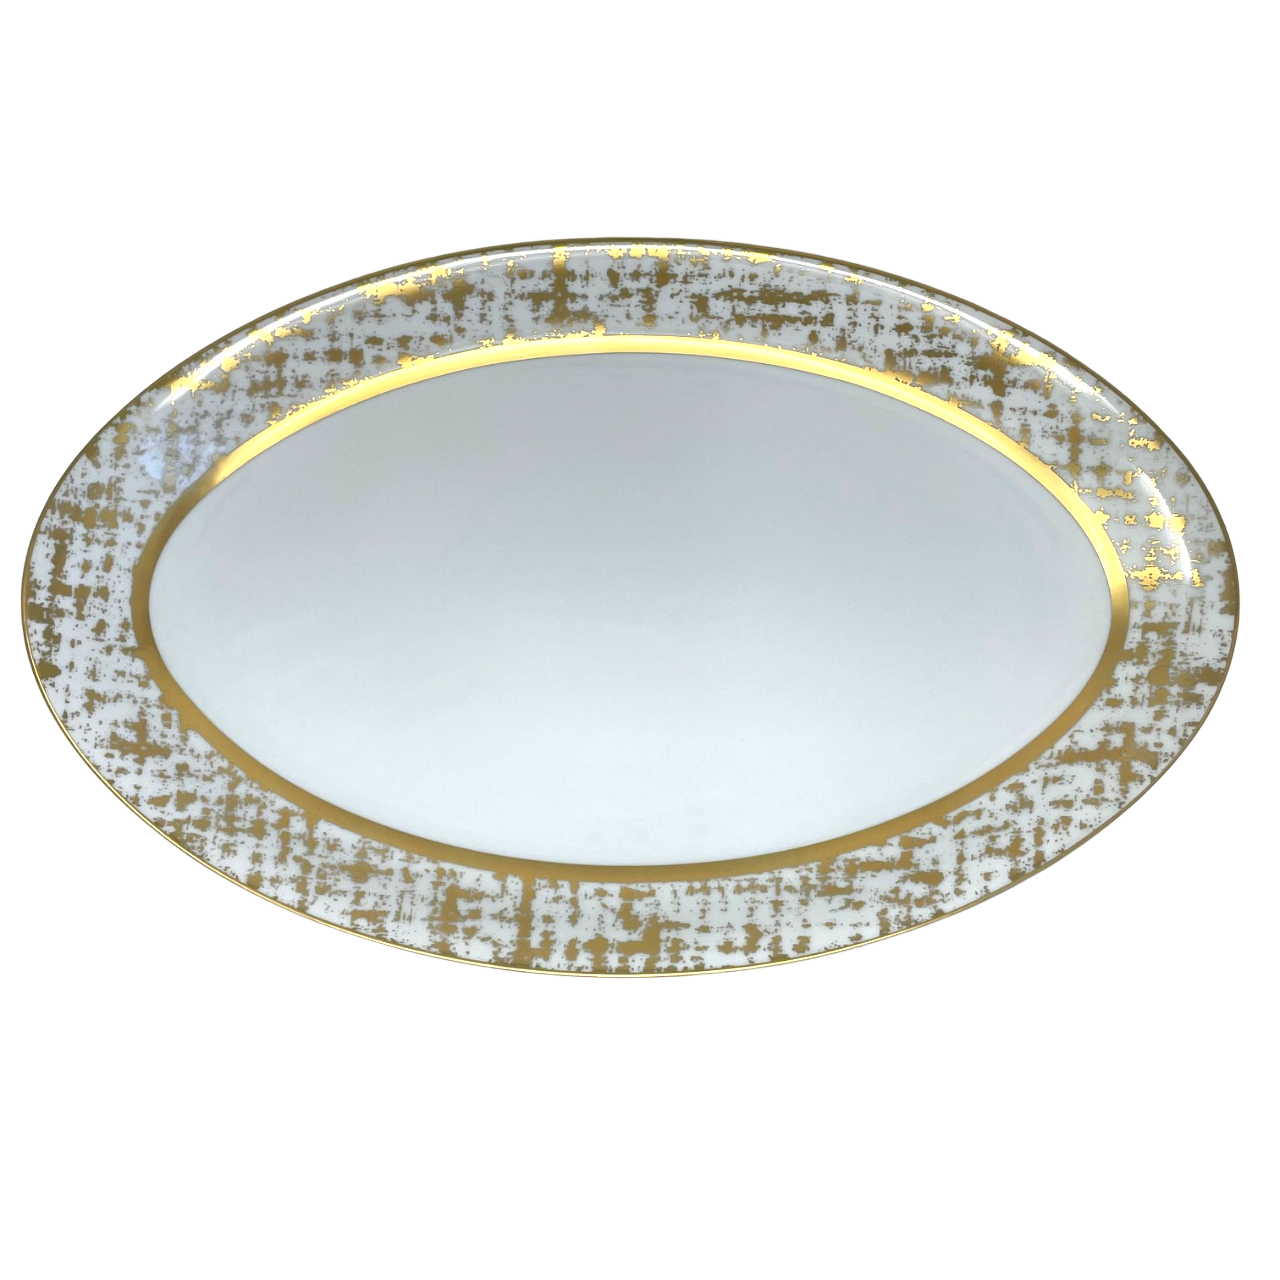 Tweed White & Gold - Oval platter 40 cm